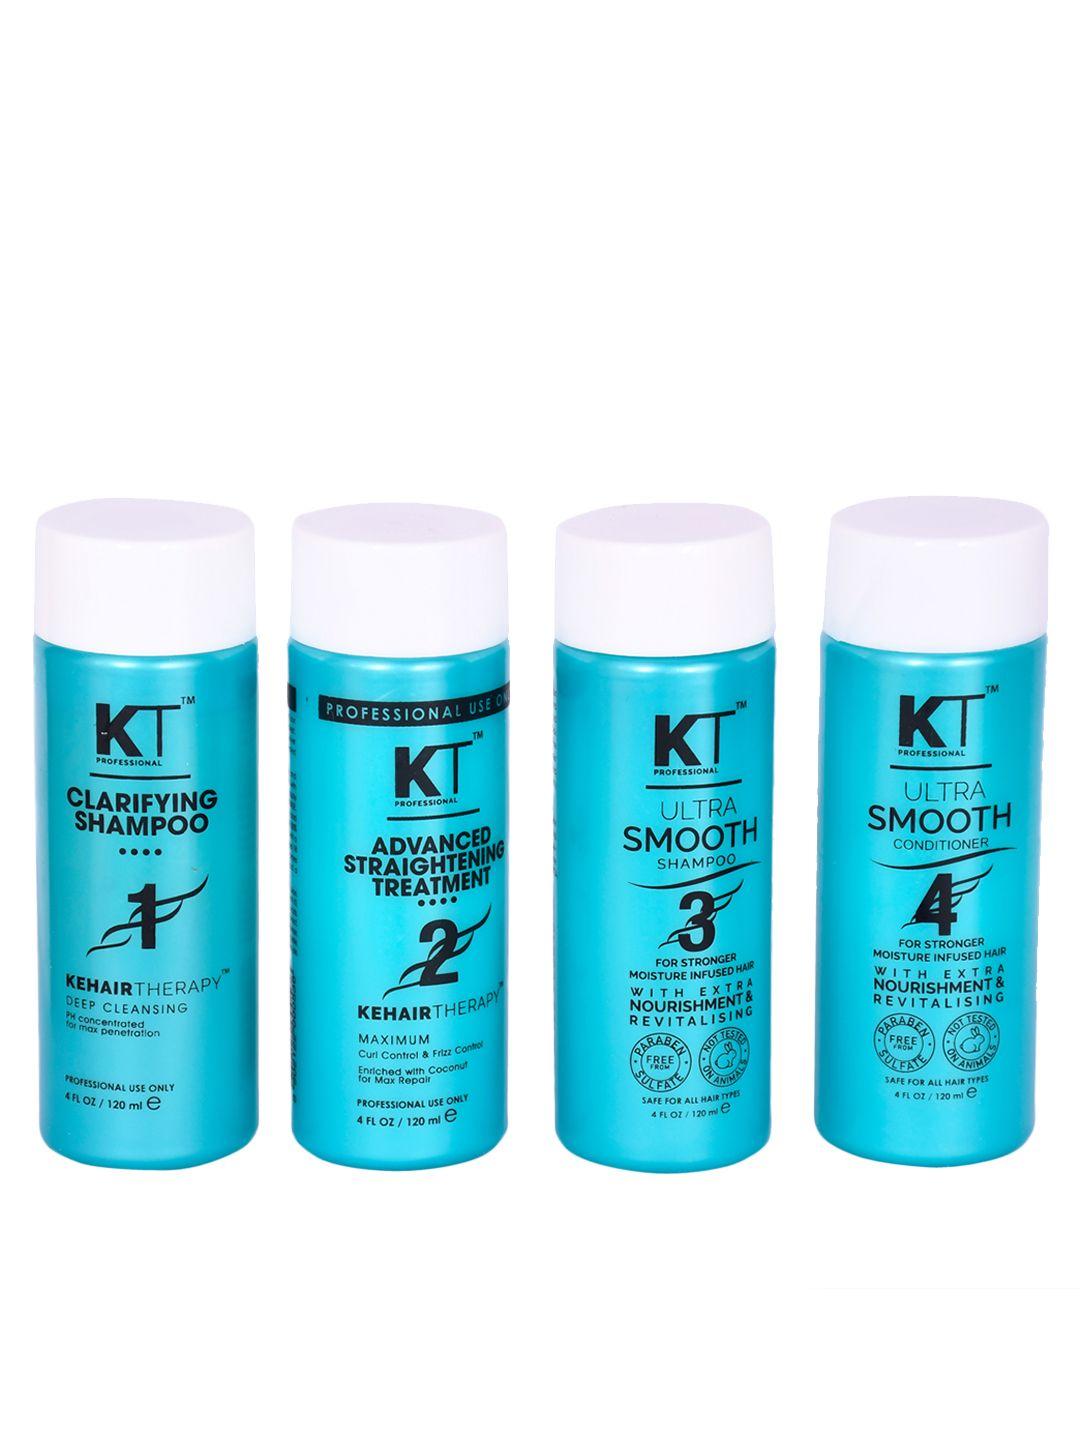 kt professional home keratin advanced straightening starter kit (480ml)